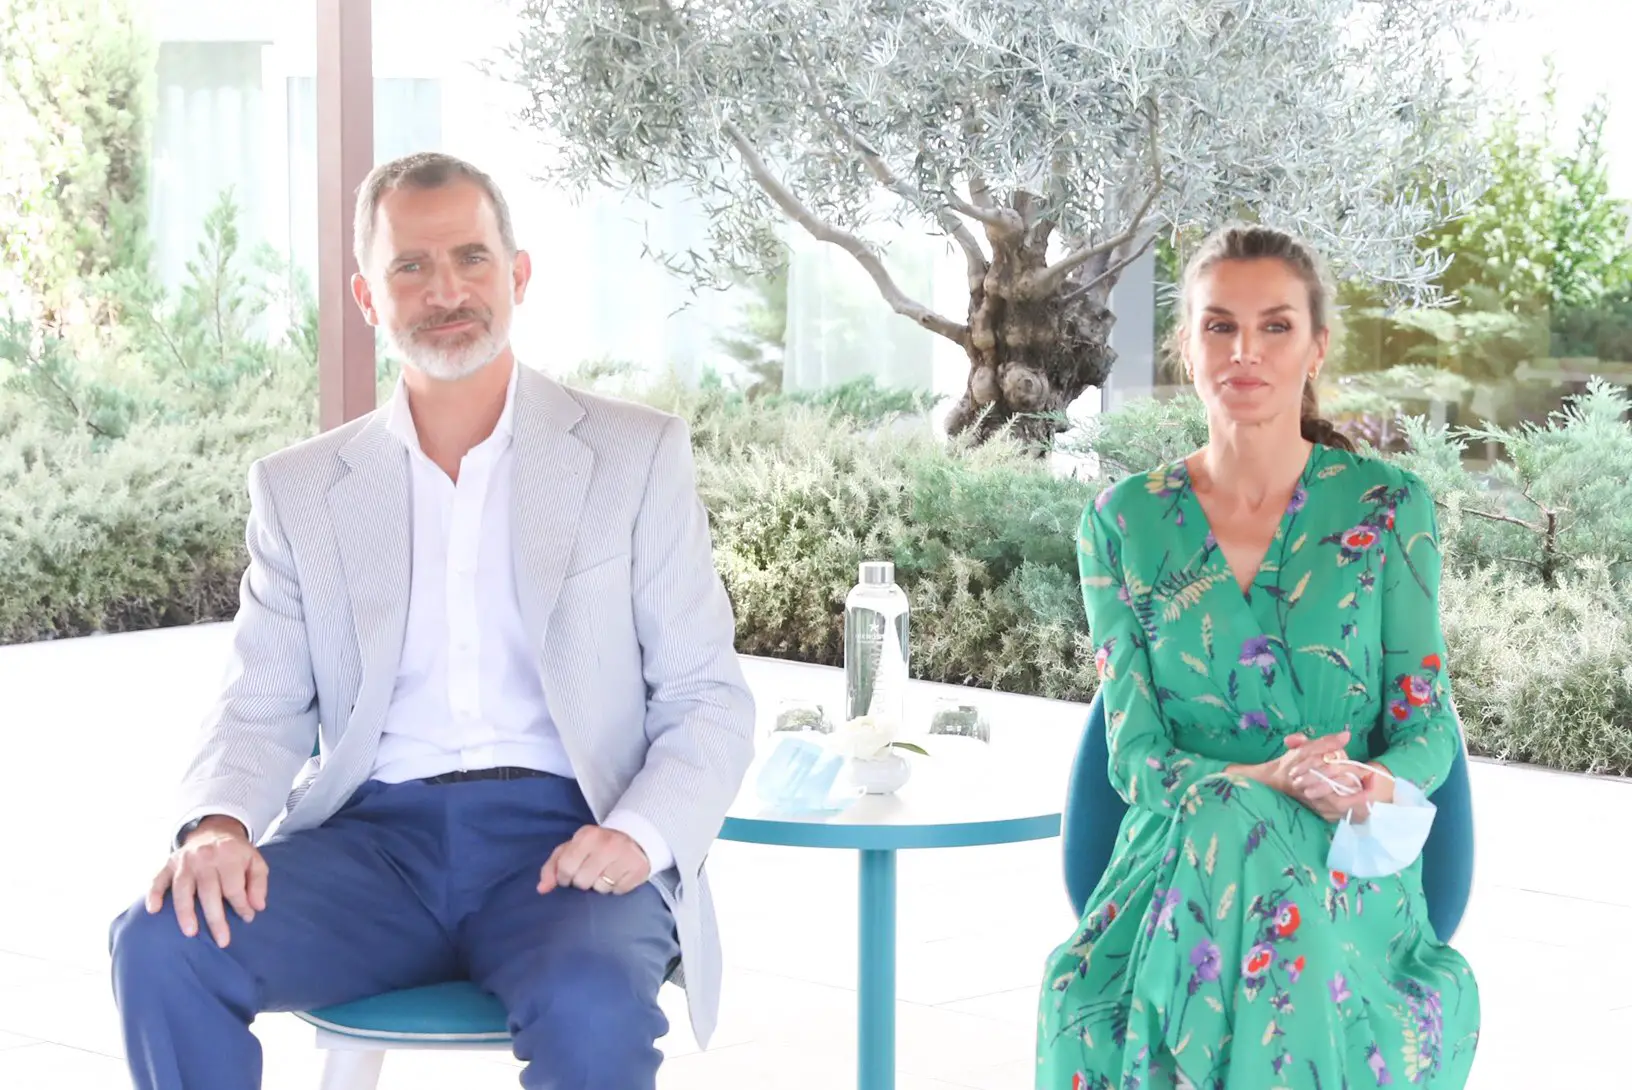 King Felipe and Queen Letizia of Spain toured the Mallorca